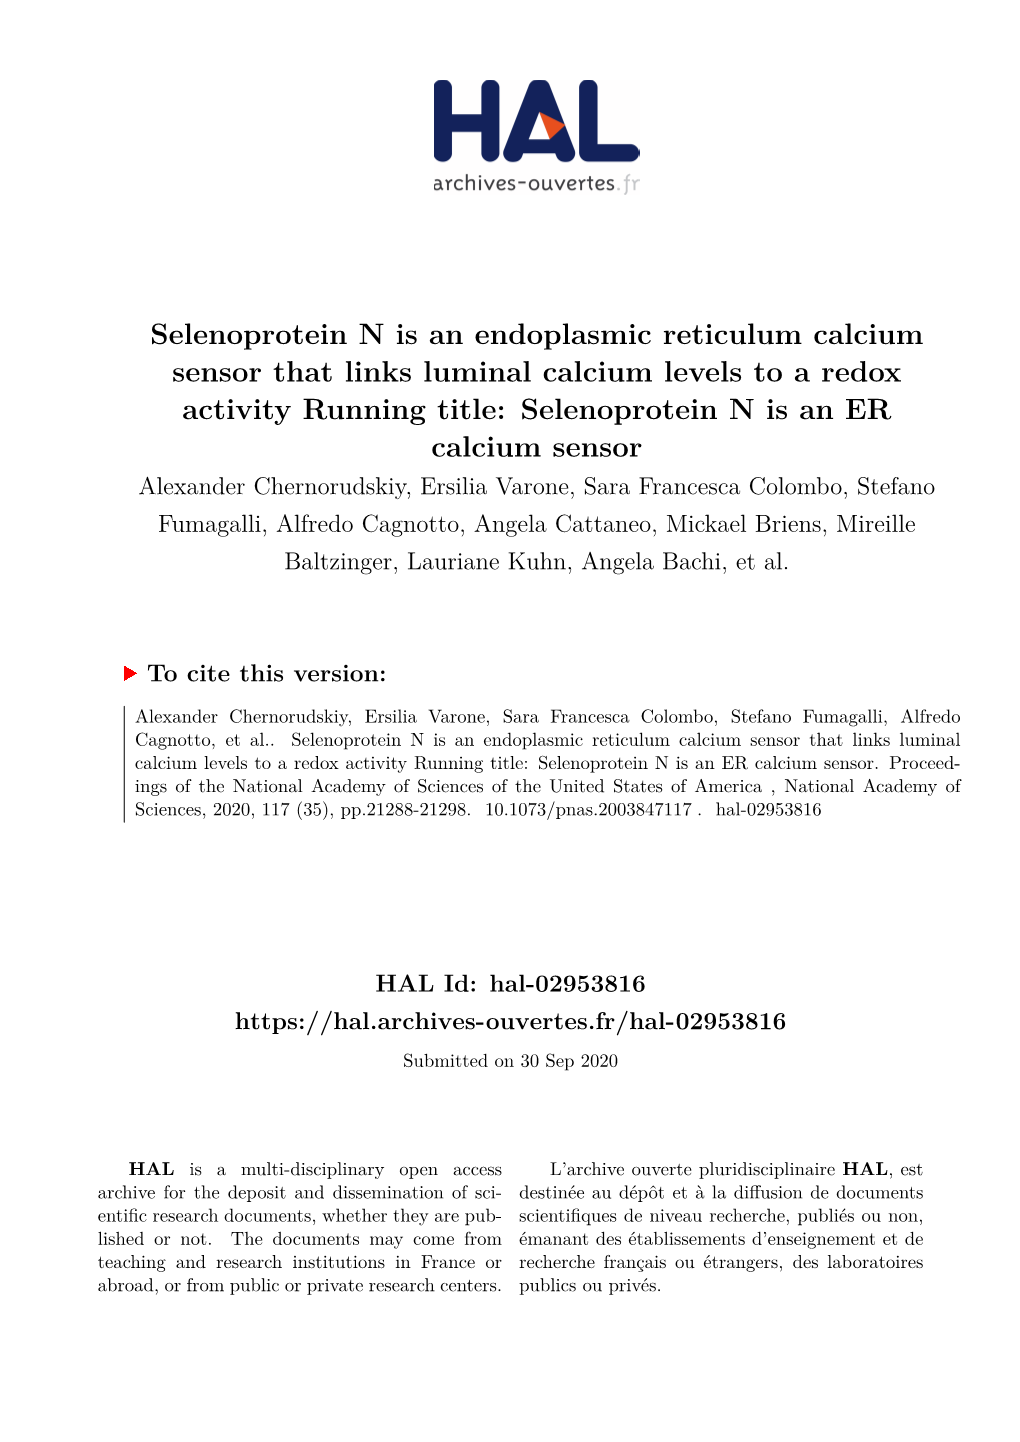 Selenoprotein N Is an Endoplasmic Reticulum Calcium Sensor That Links Luminal Calcium Levels to a Redox Activity Running Title